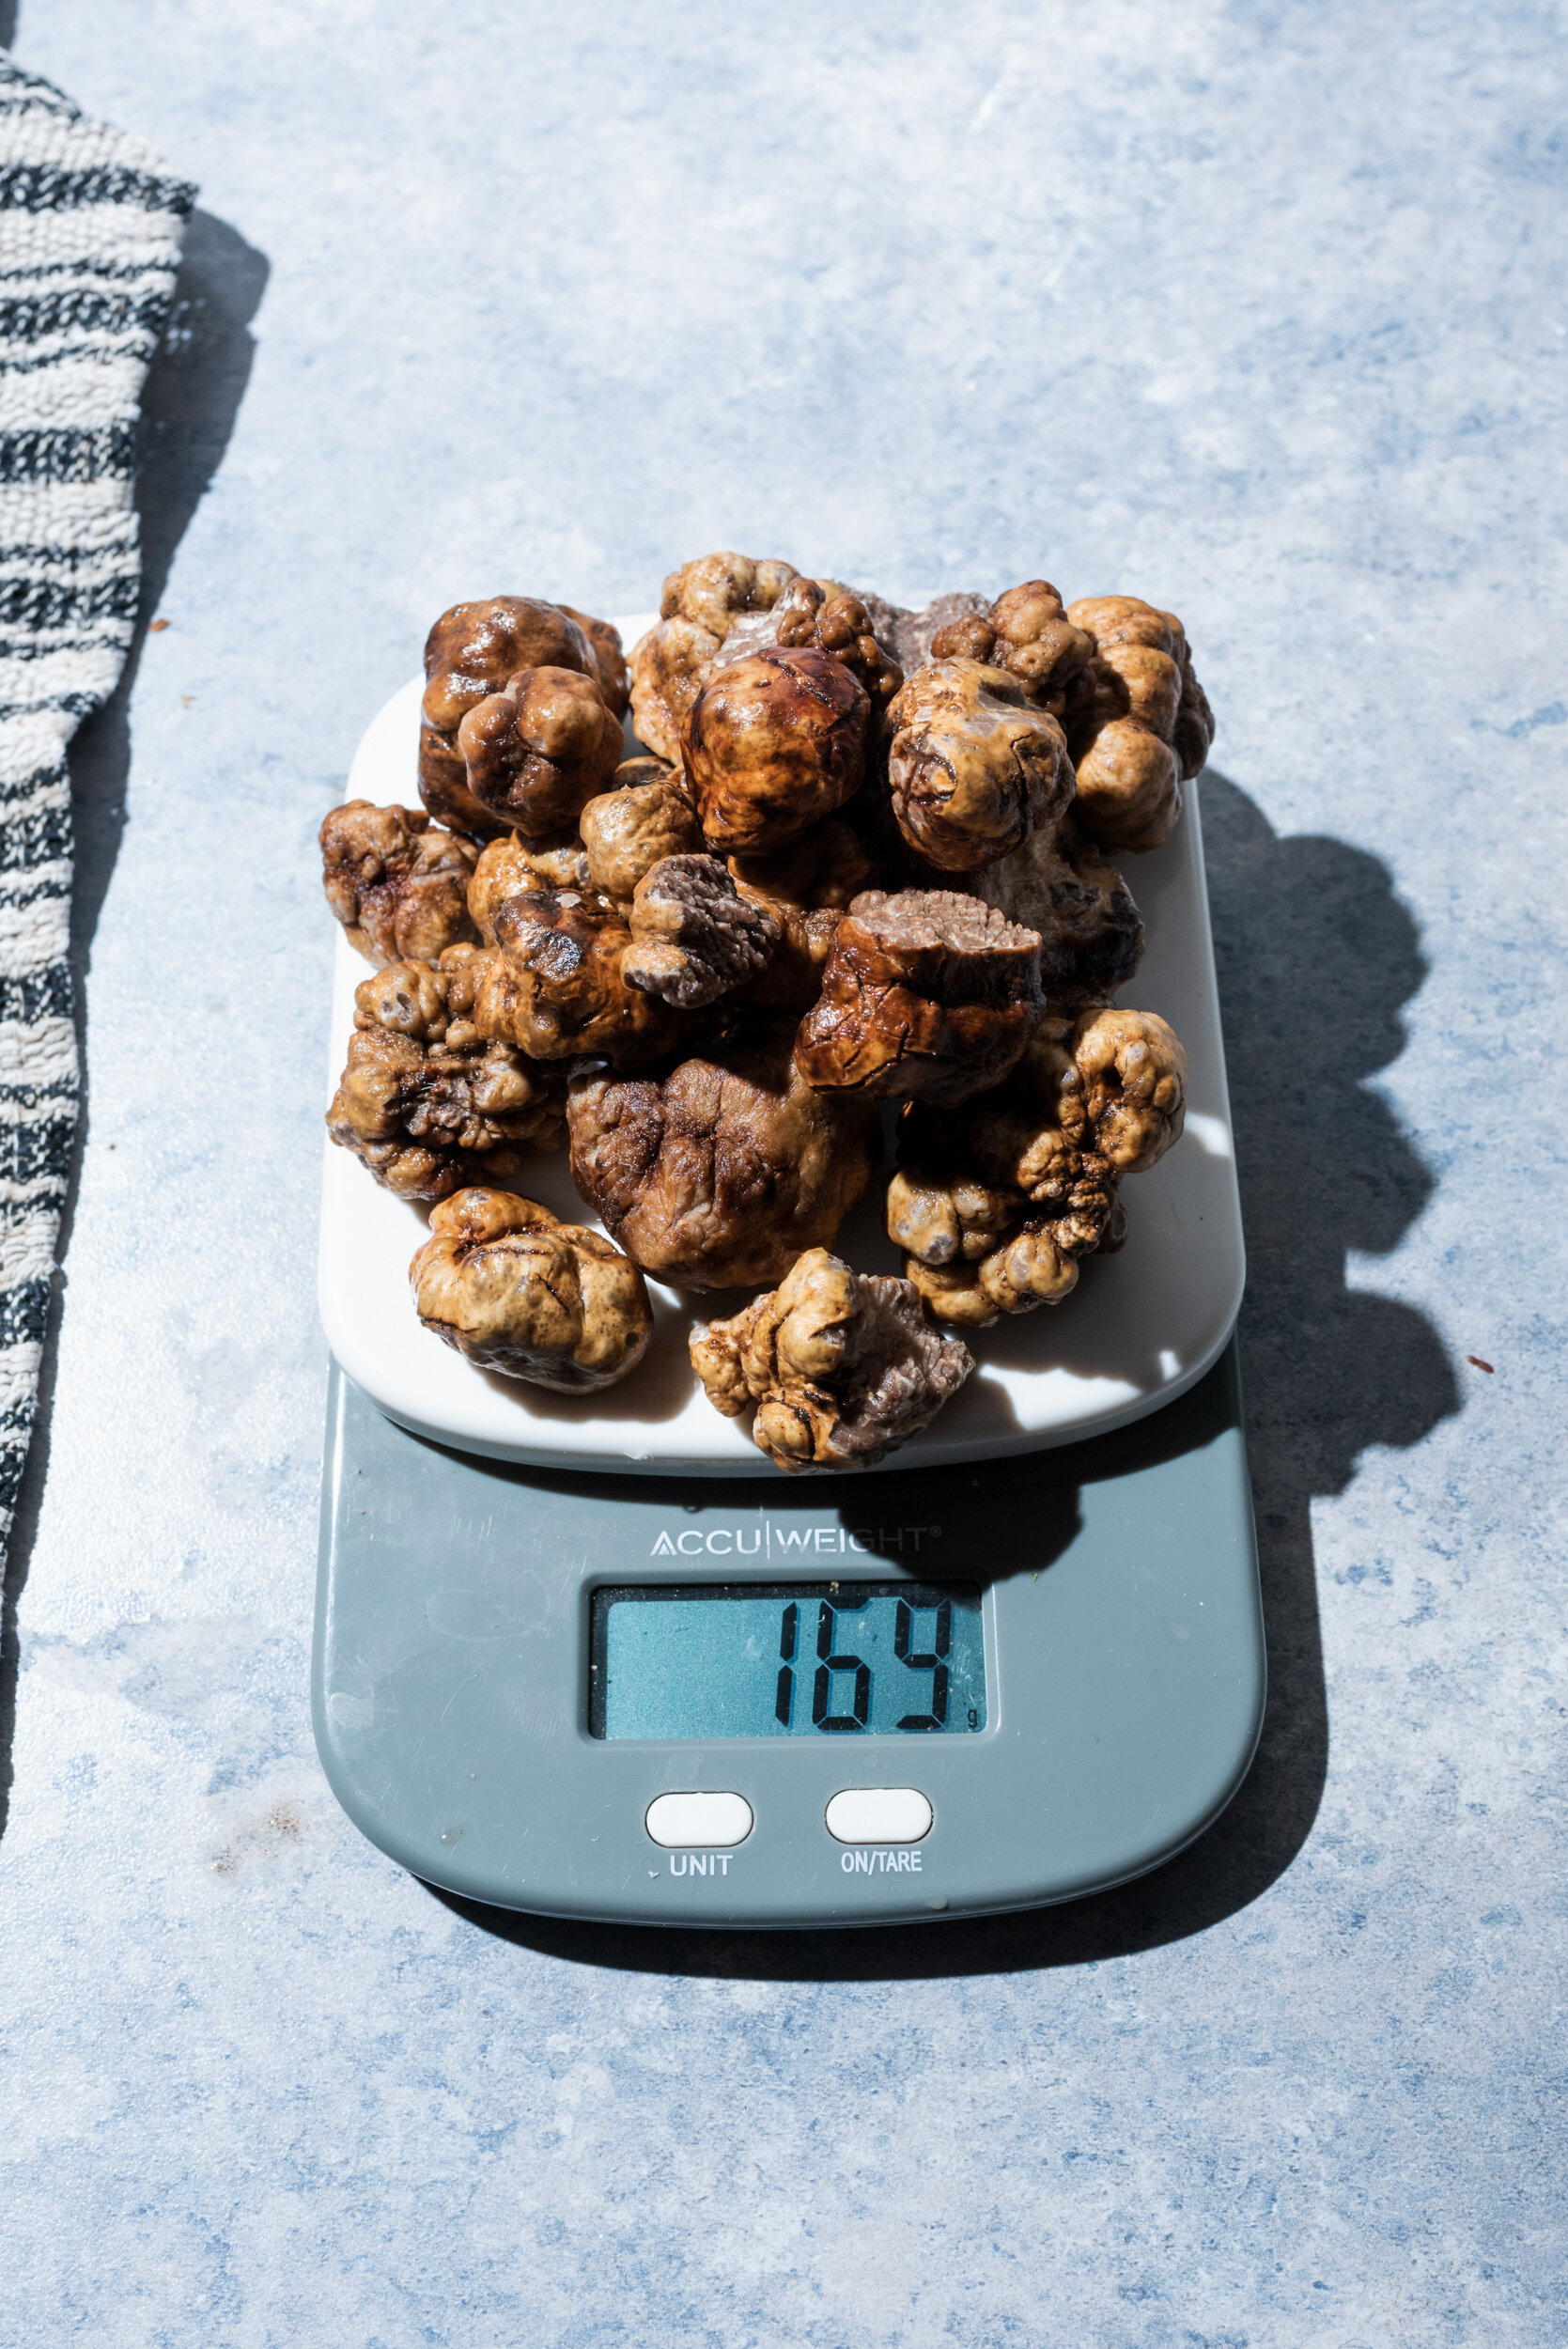 Fresh truffles on a scale